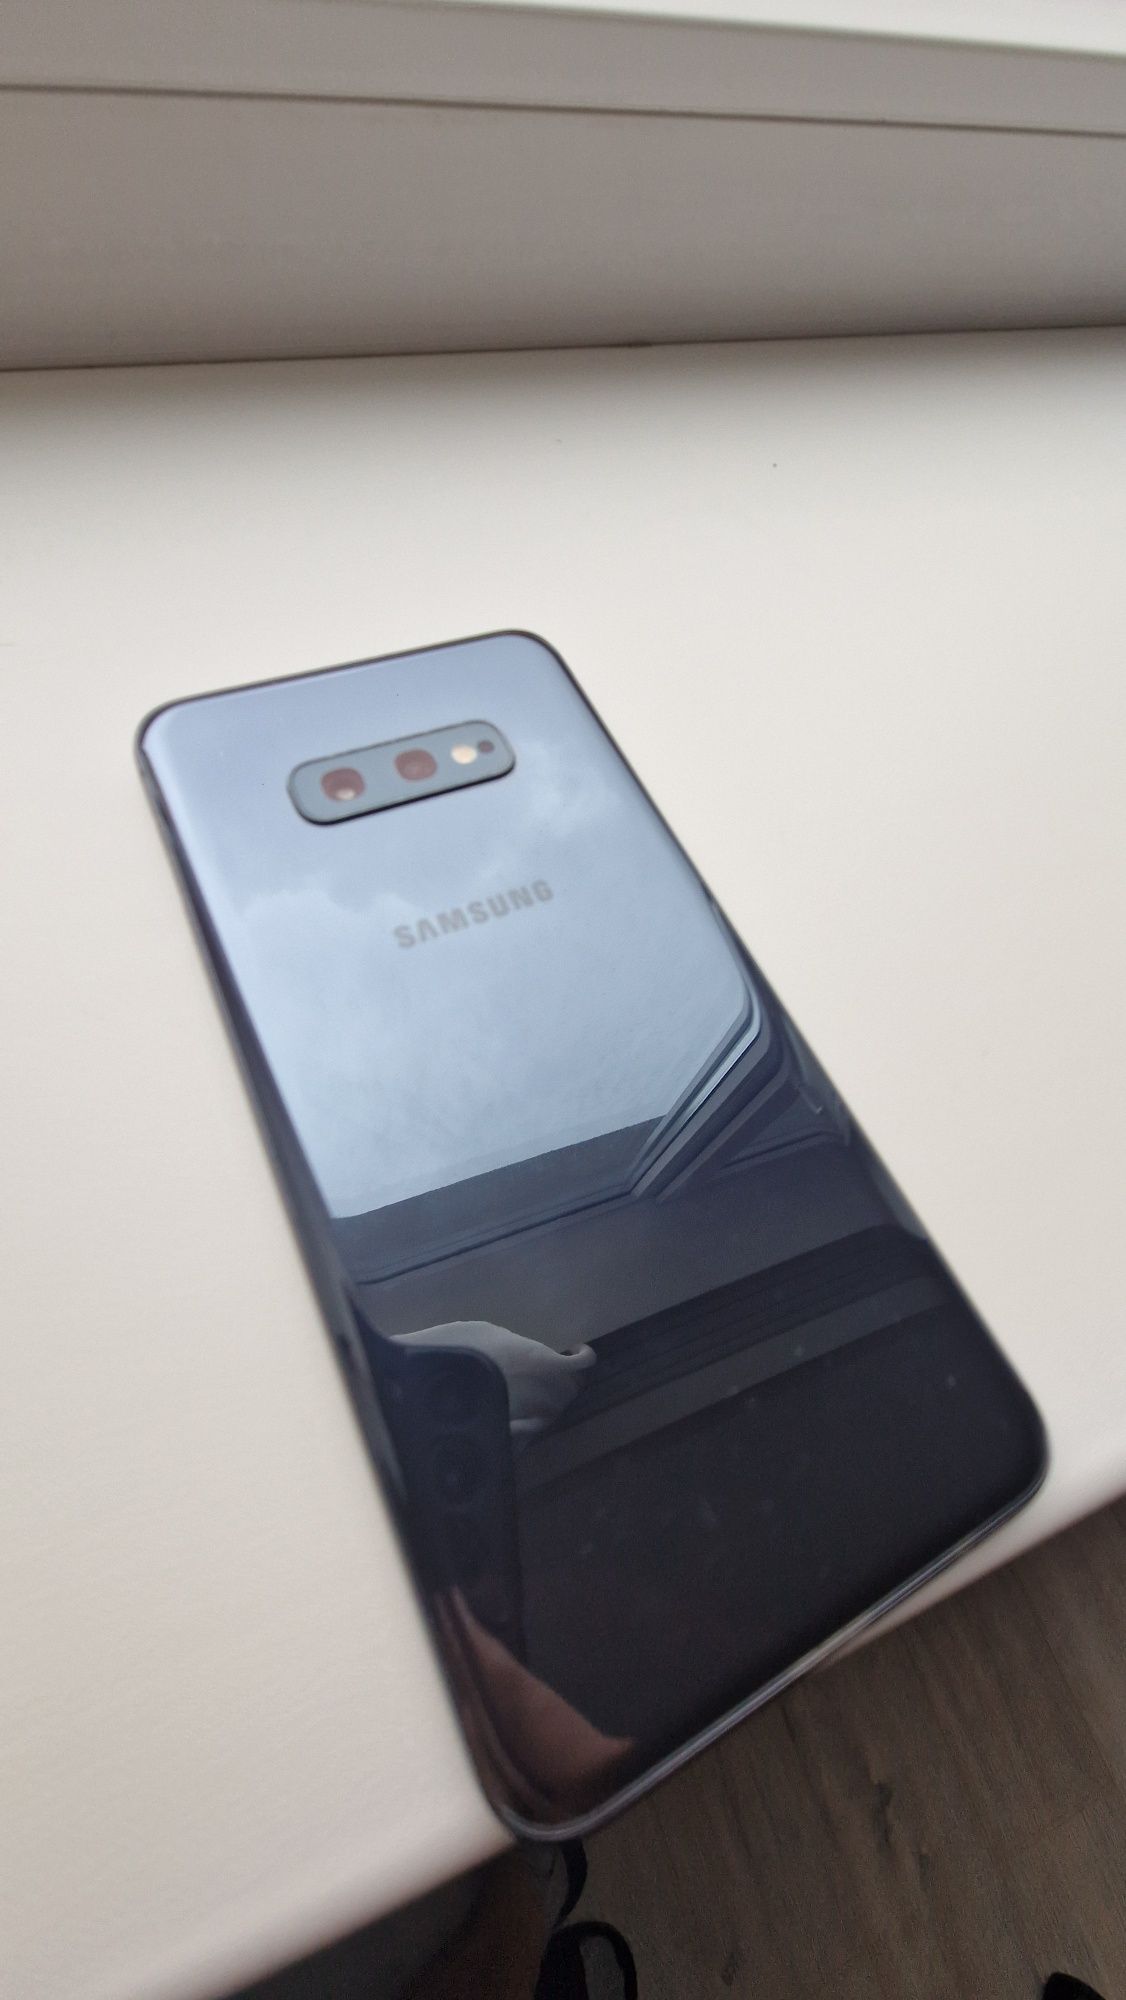 Samsung galaxy S10e